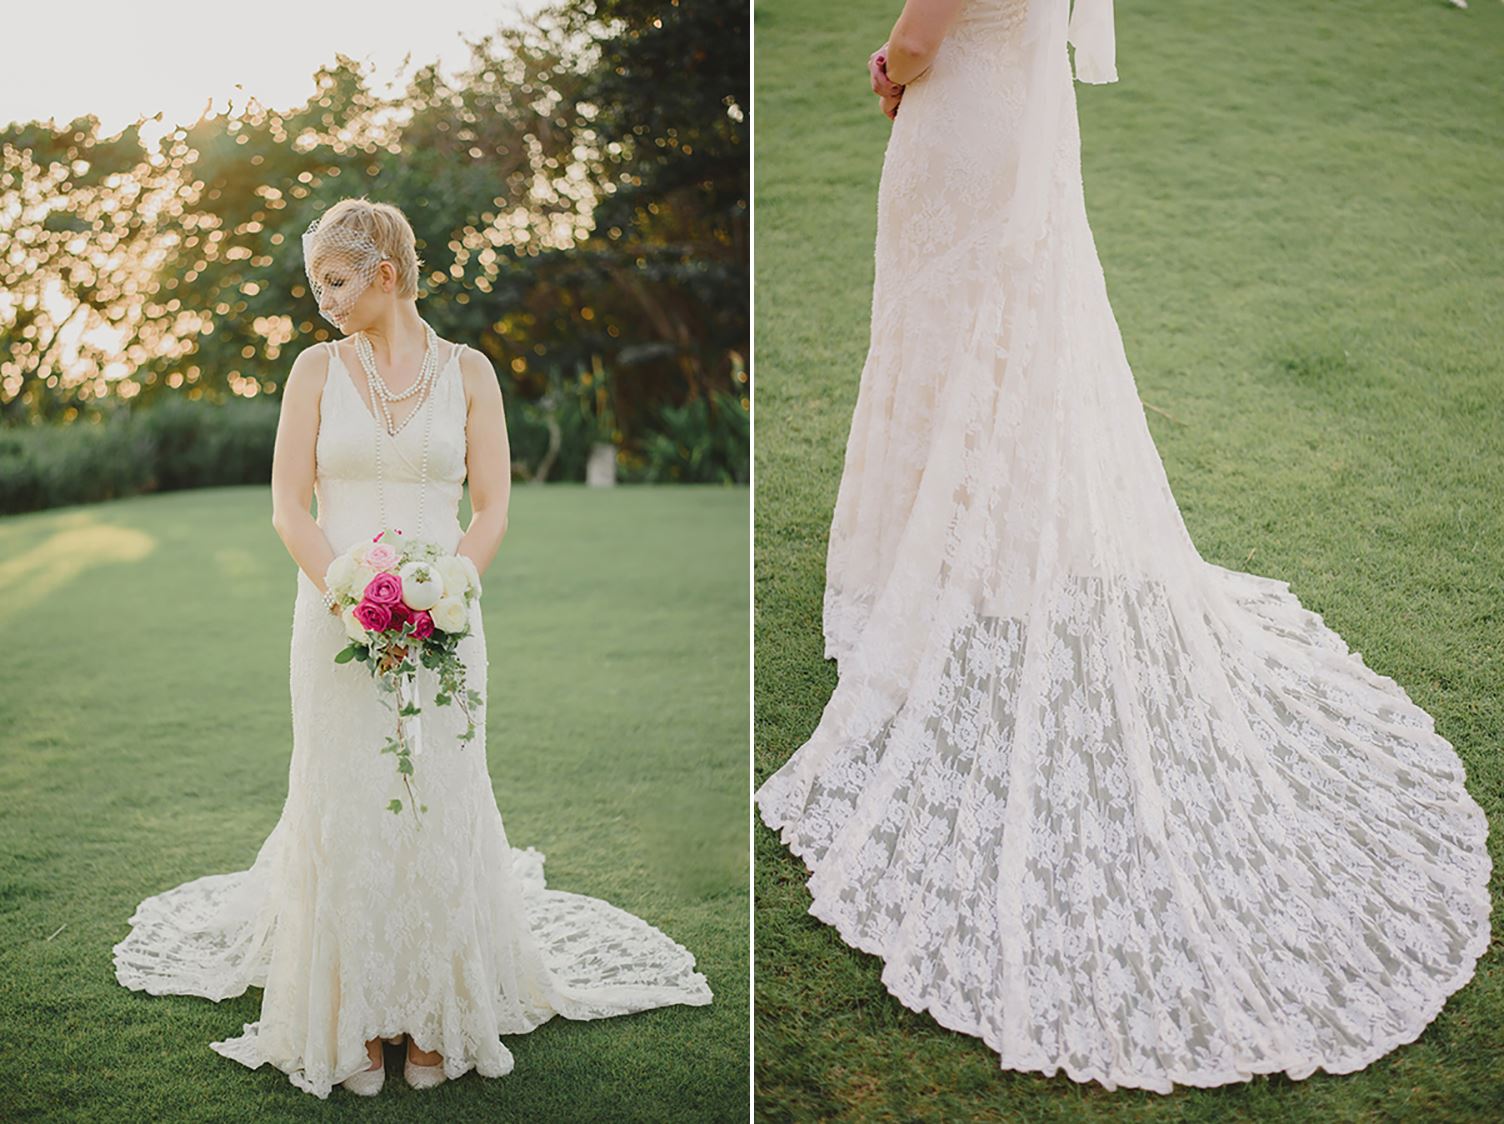 Lace wedding dress for a destination wedding